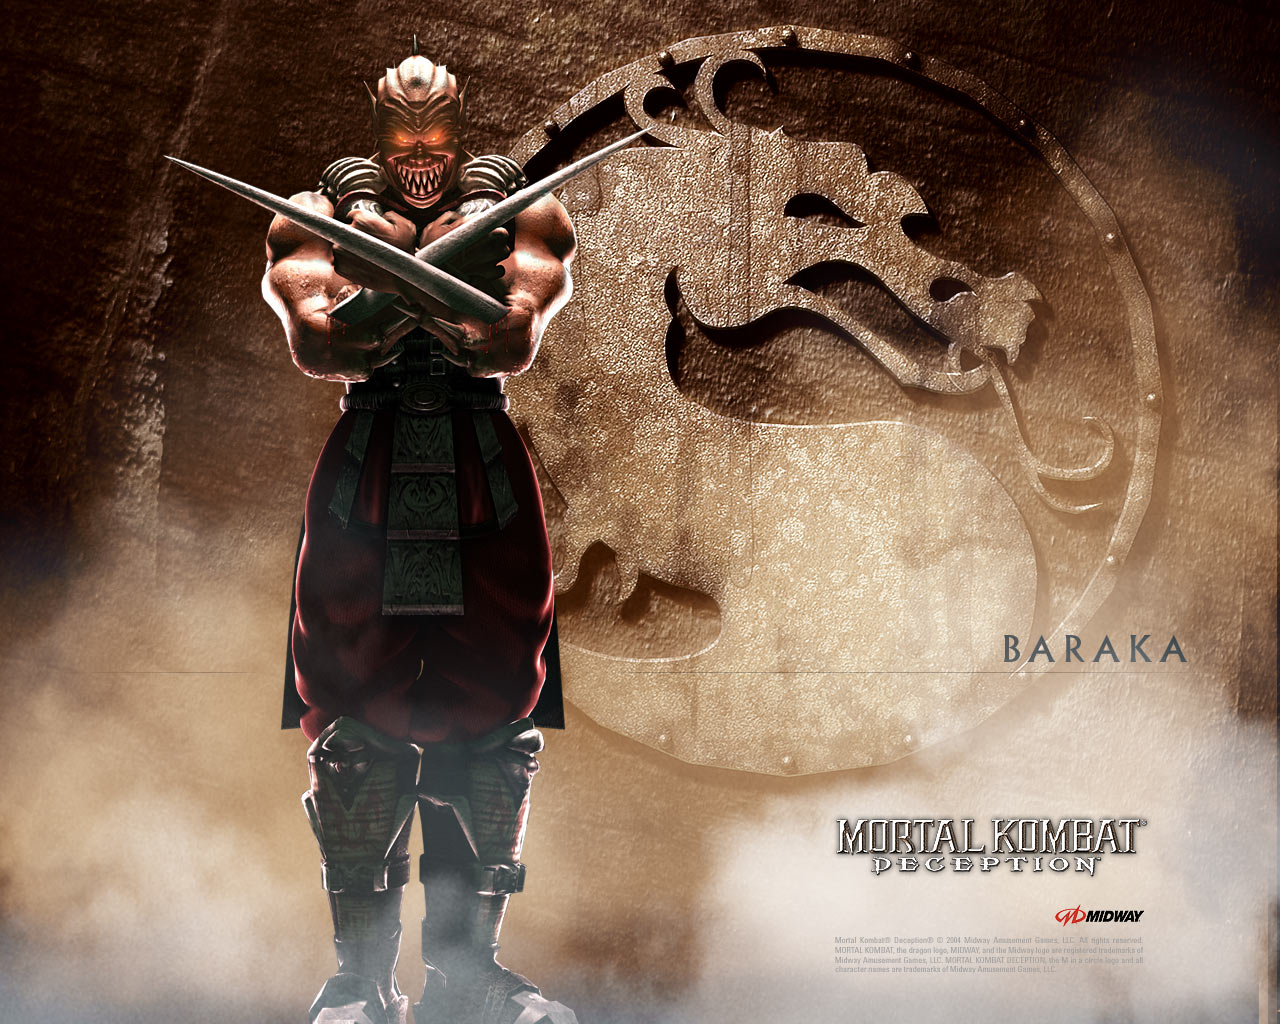 Pin by Daniel Düsentrieb on Mortal kombat Art  Mortal kombat characters, Mortal  kombat, Baraka mortal kombat